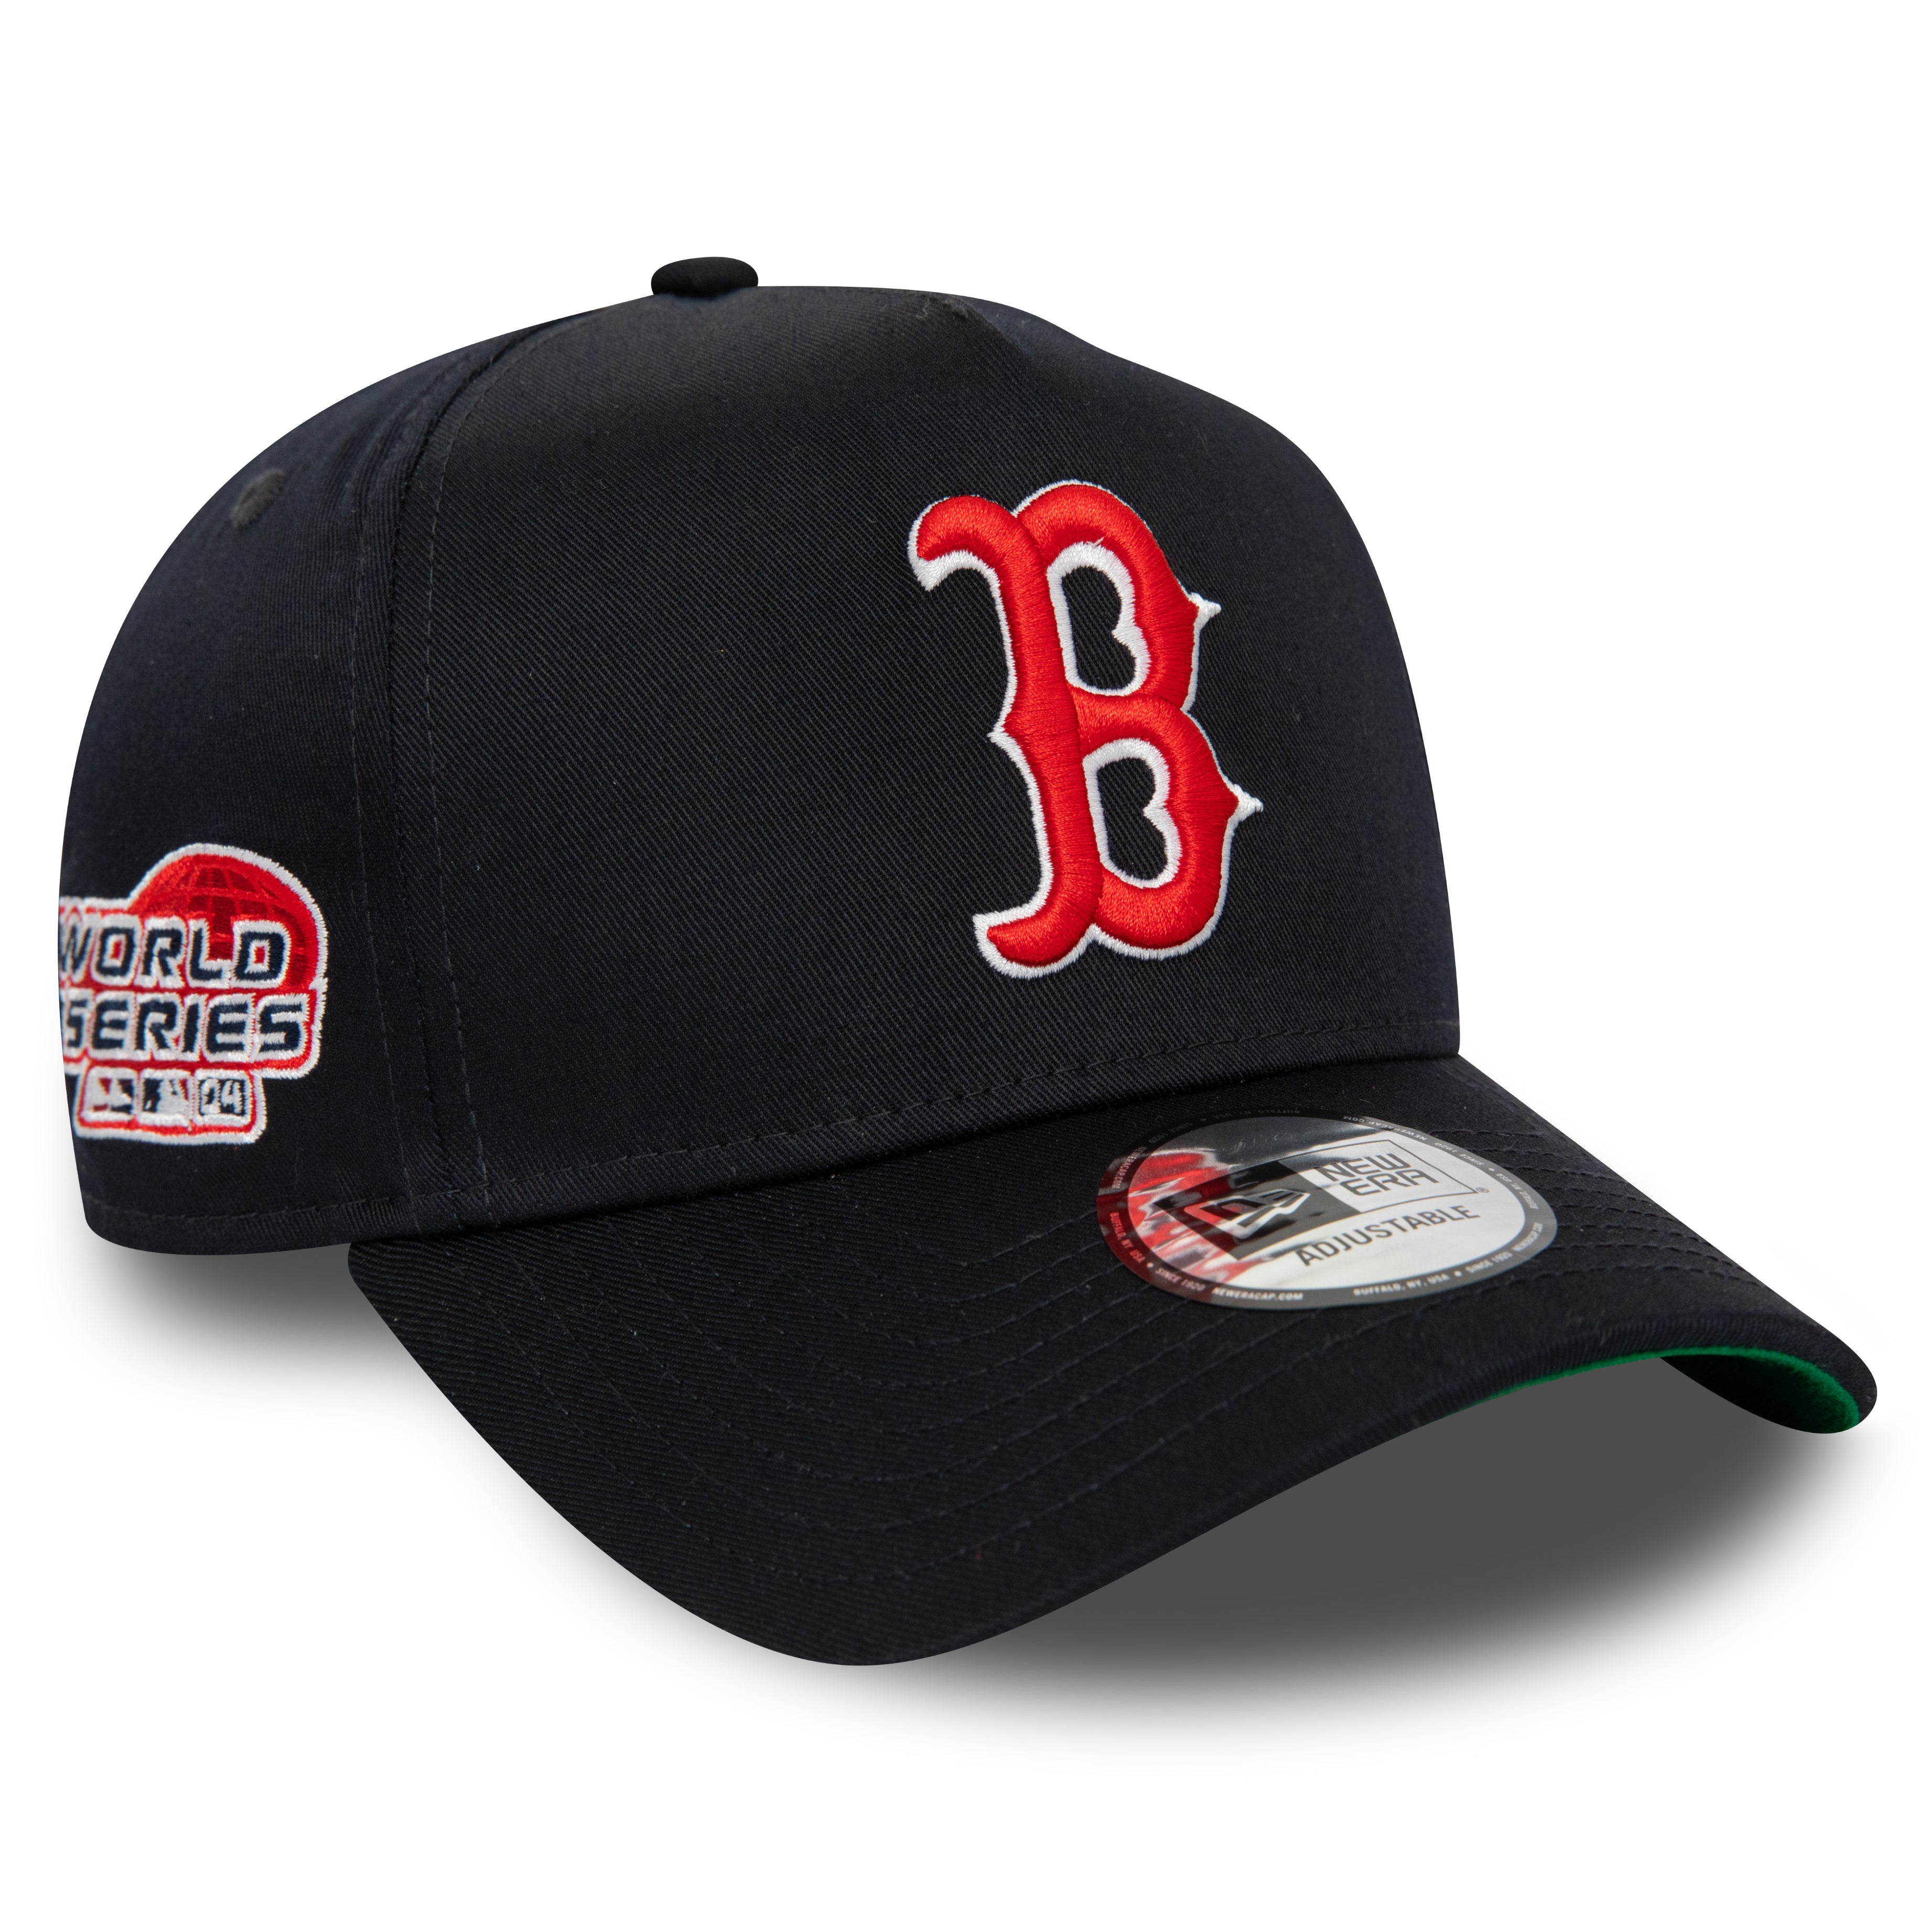 NEW ERA 9FORTY A-FRAME MLB BOSTON RED SOX WORLD SERIES 2004 NAVY / KELLY GREEN UV SNAPBACK CAP